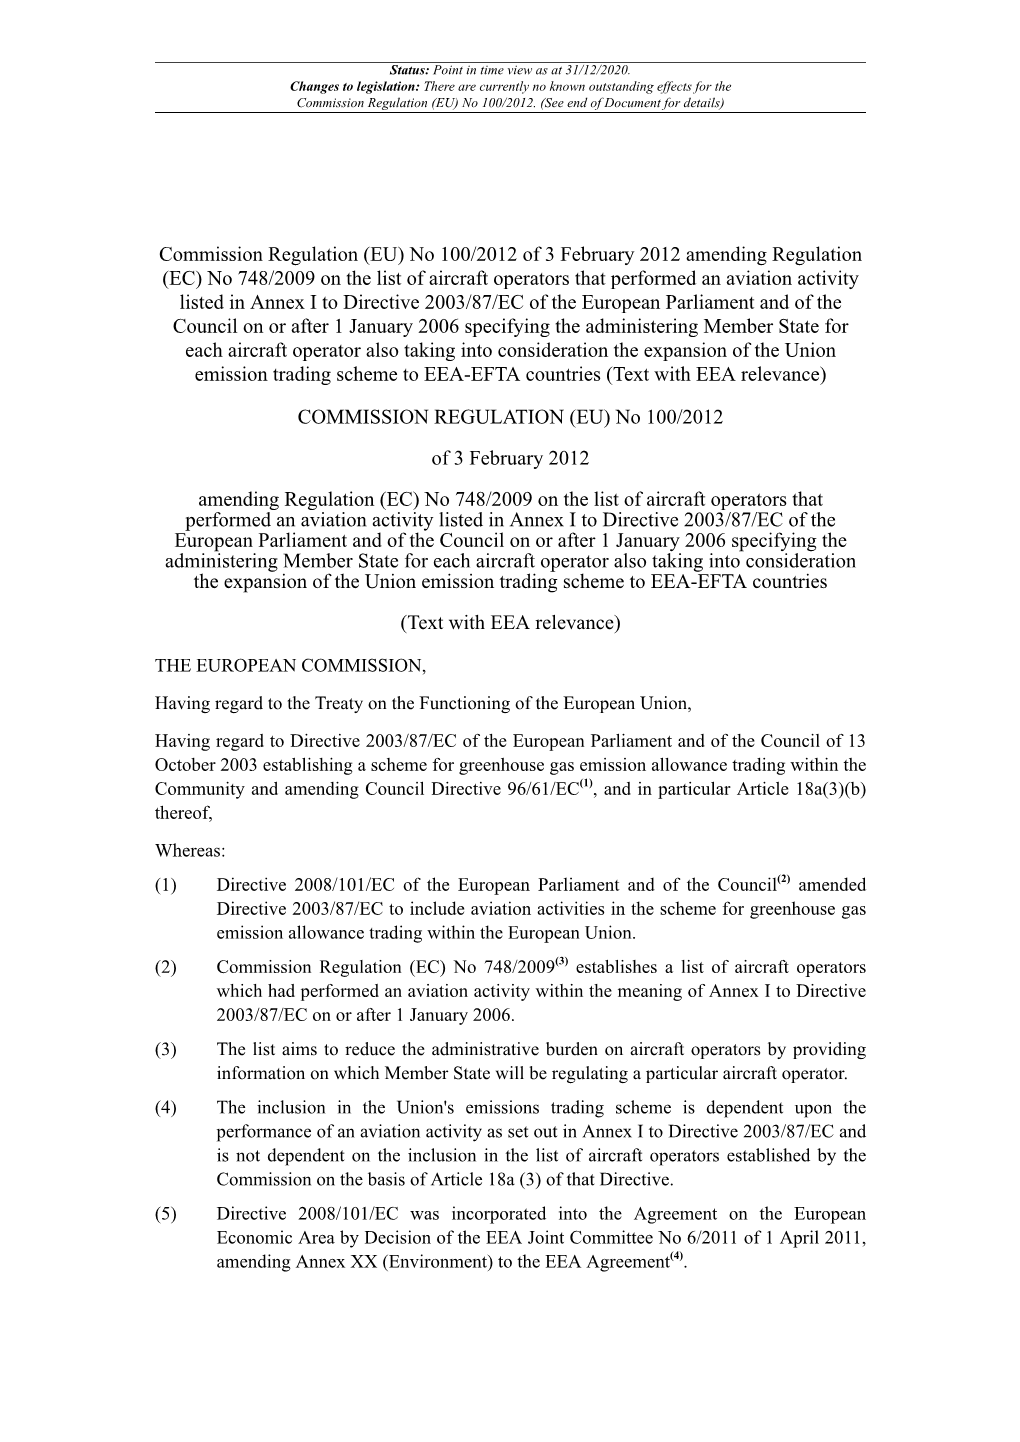 Commission Regulation (EU) No 100/2012